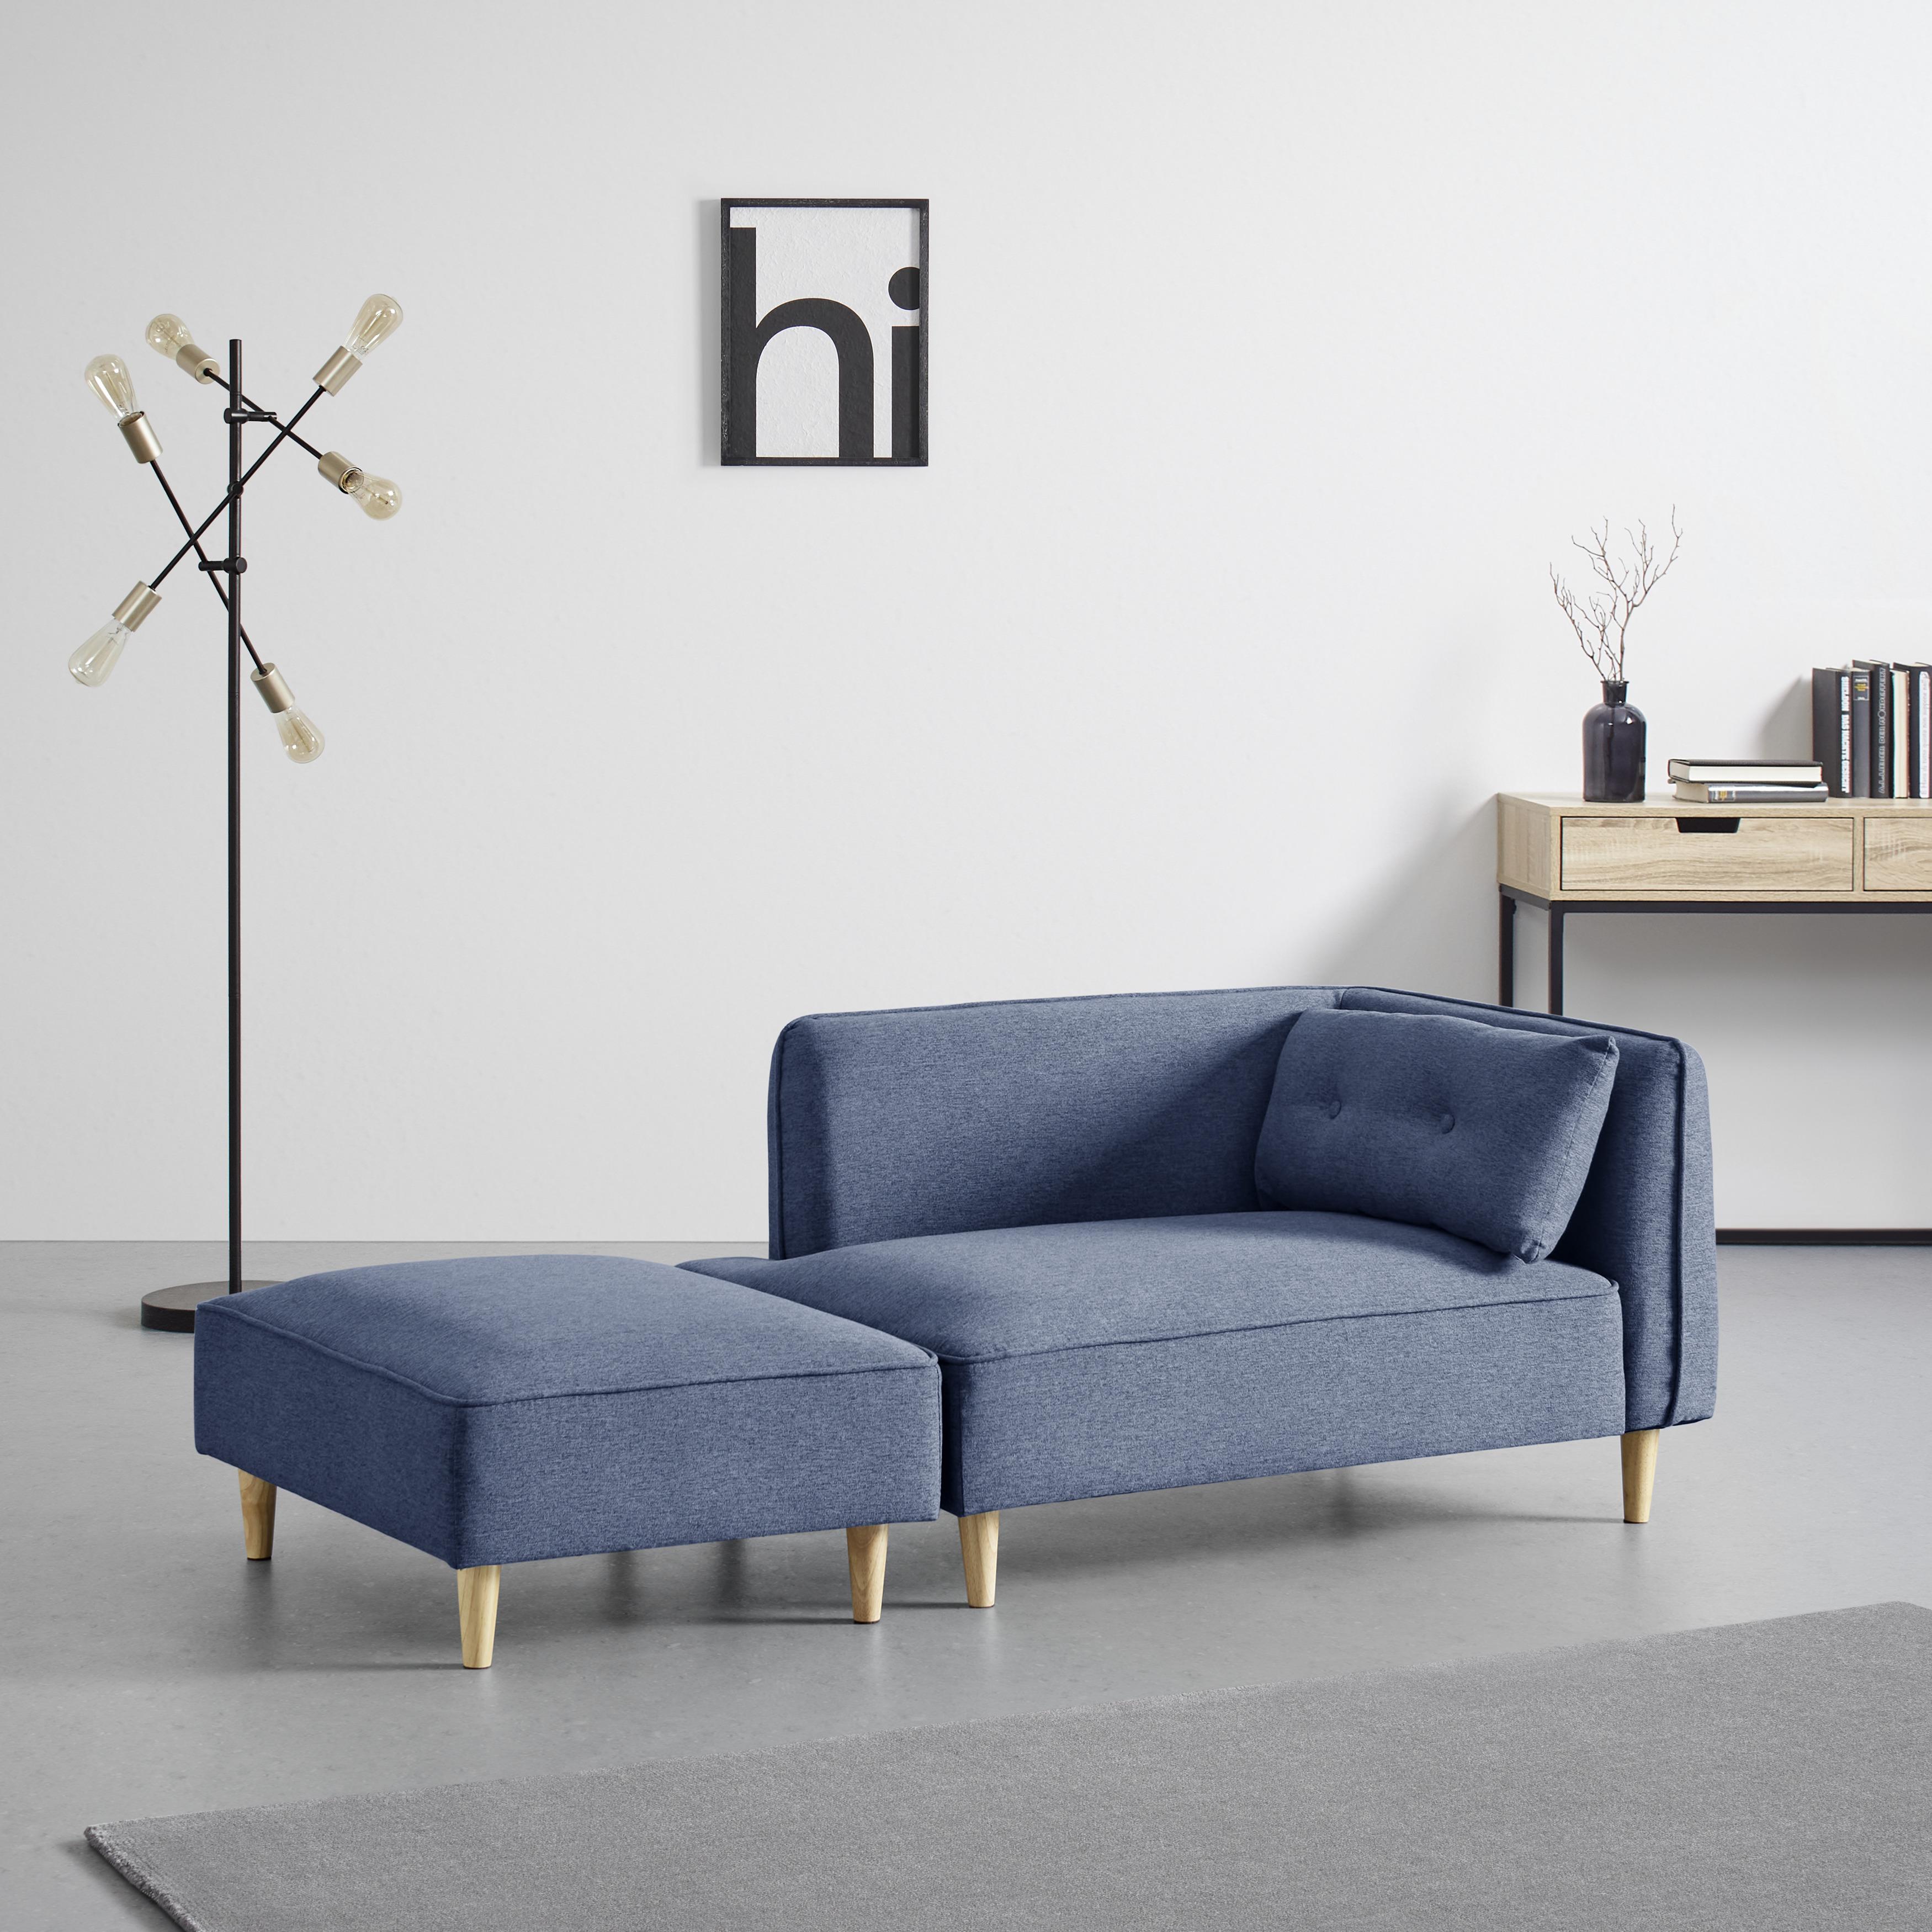 Modulares Sofa "Fanny" mit Hocker, blau - Blau/Naturfarben, MODERN, Holz/Textil (154/55/73cm) - Bessagi Home